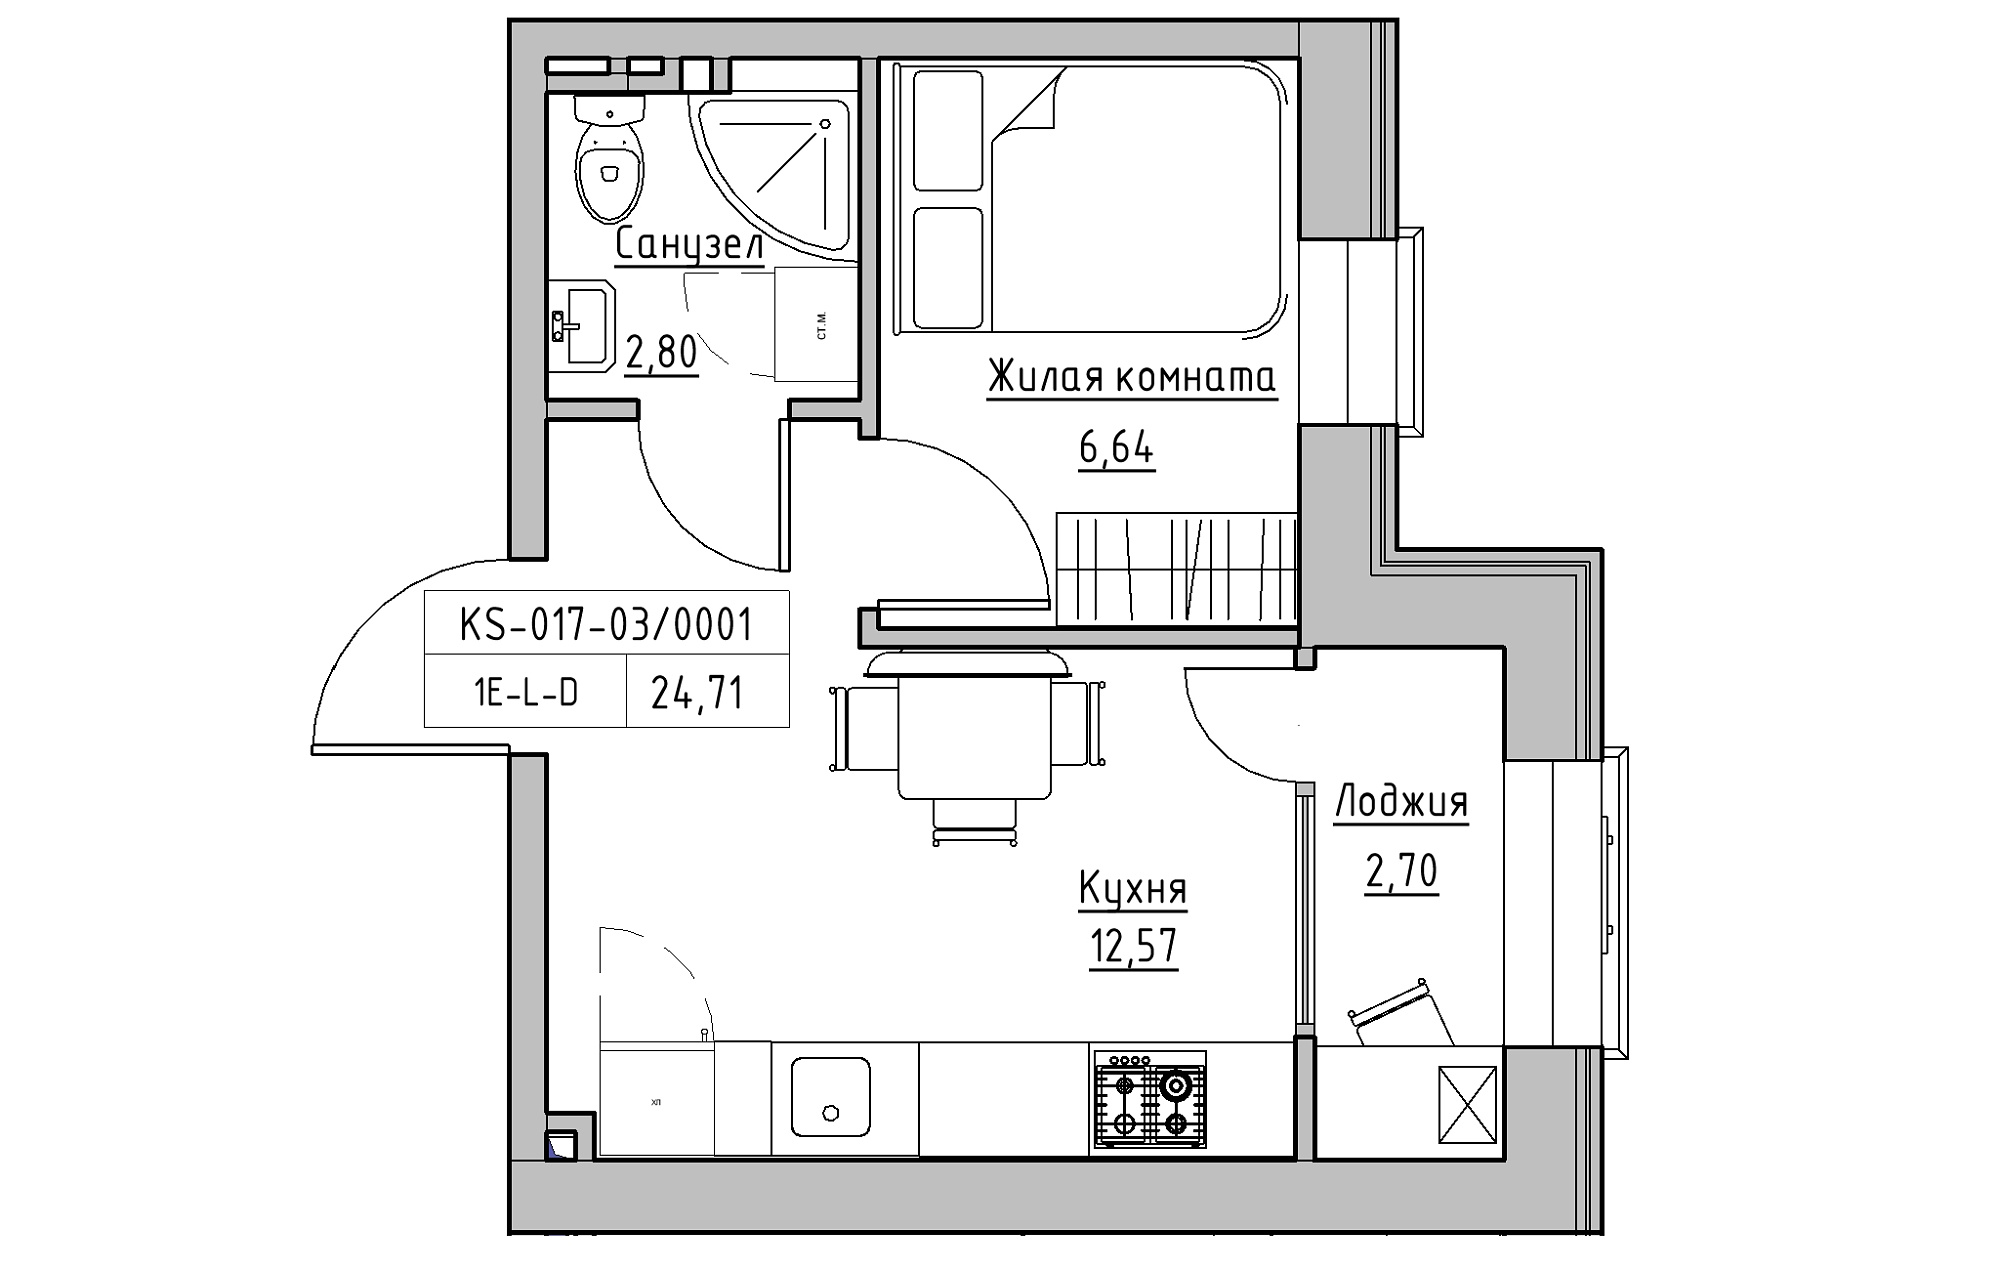 Planning 1-rm flats area 24.71m2, KS-017-03/0001.